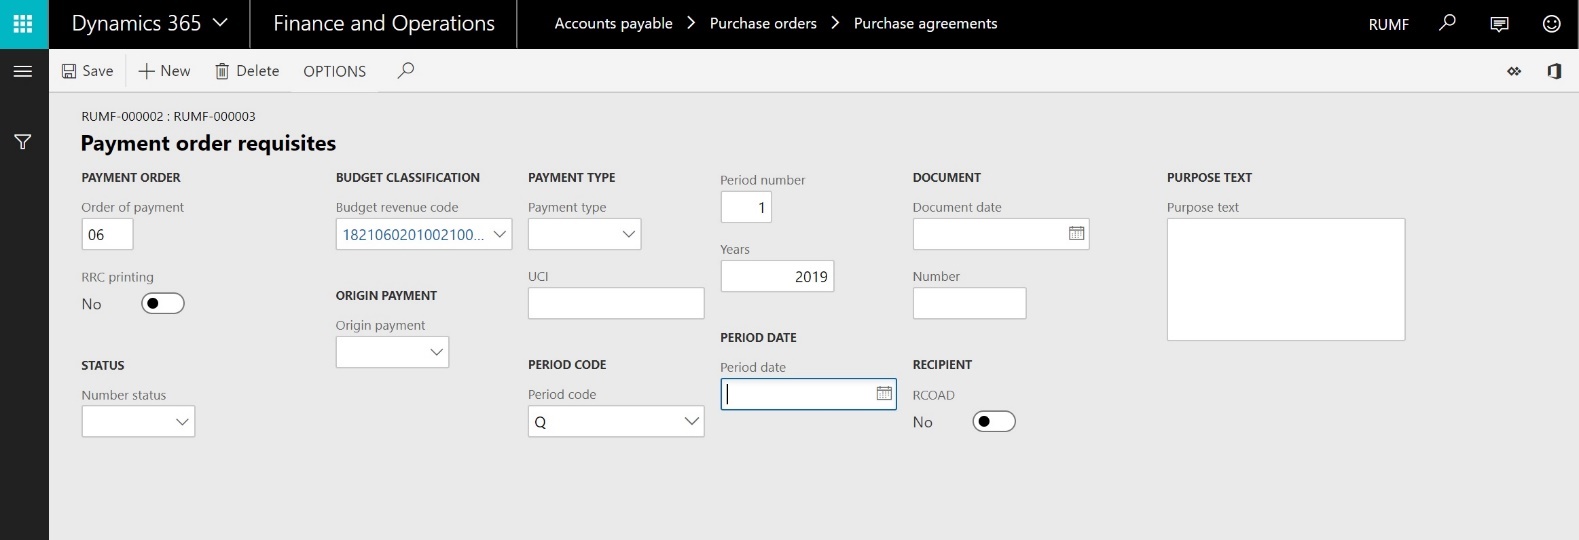 Set up default payment order requisites.